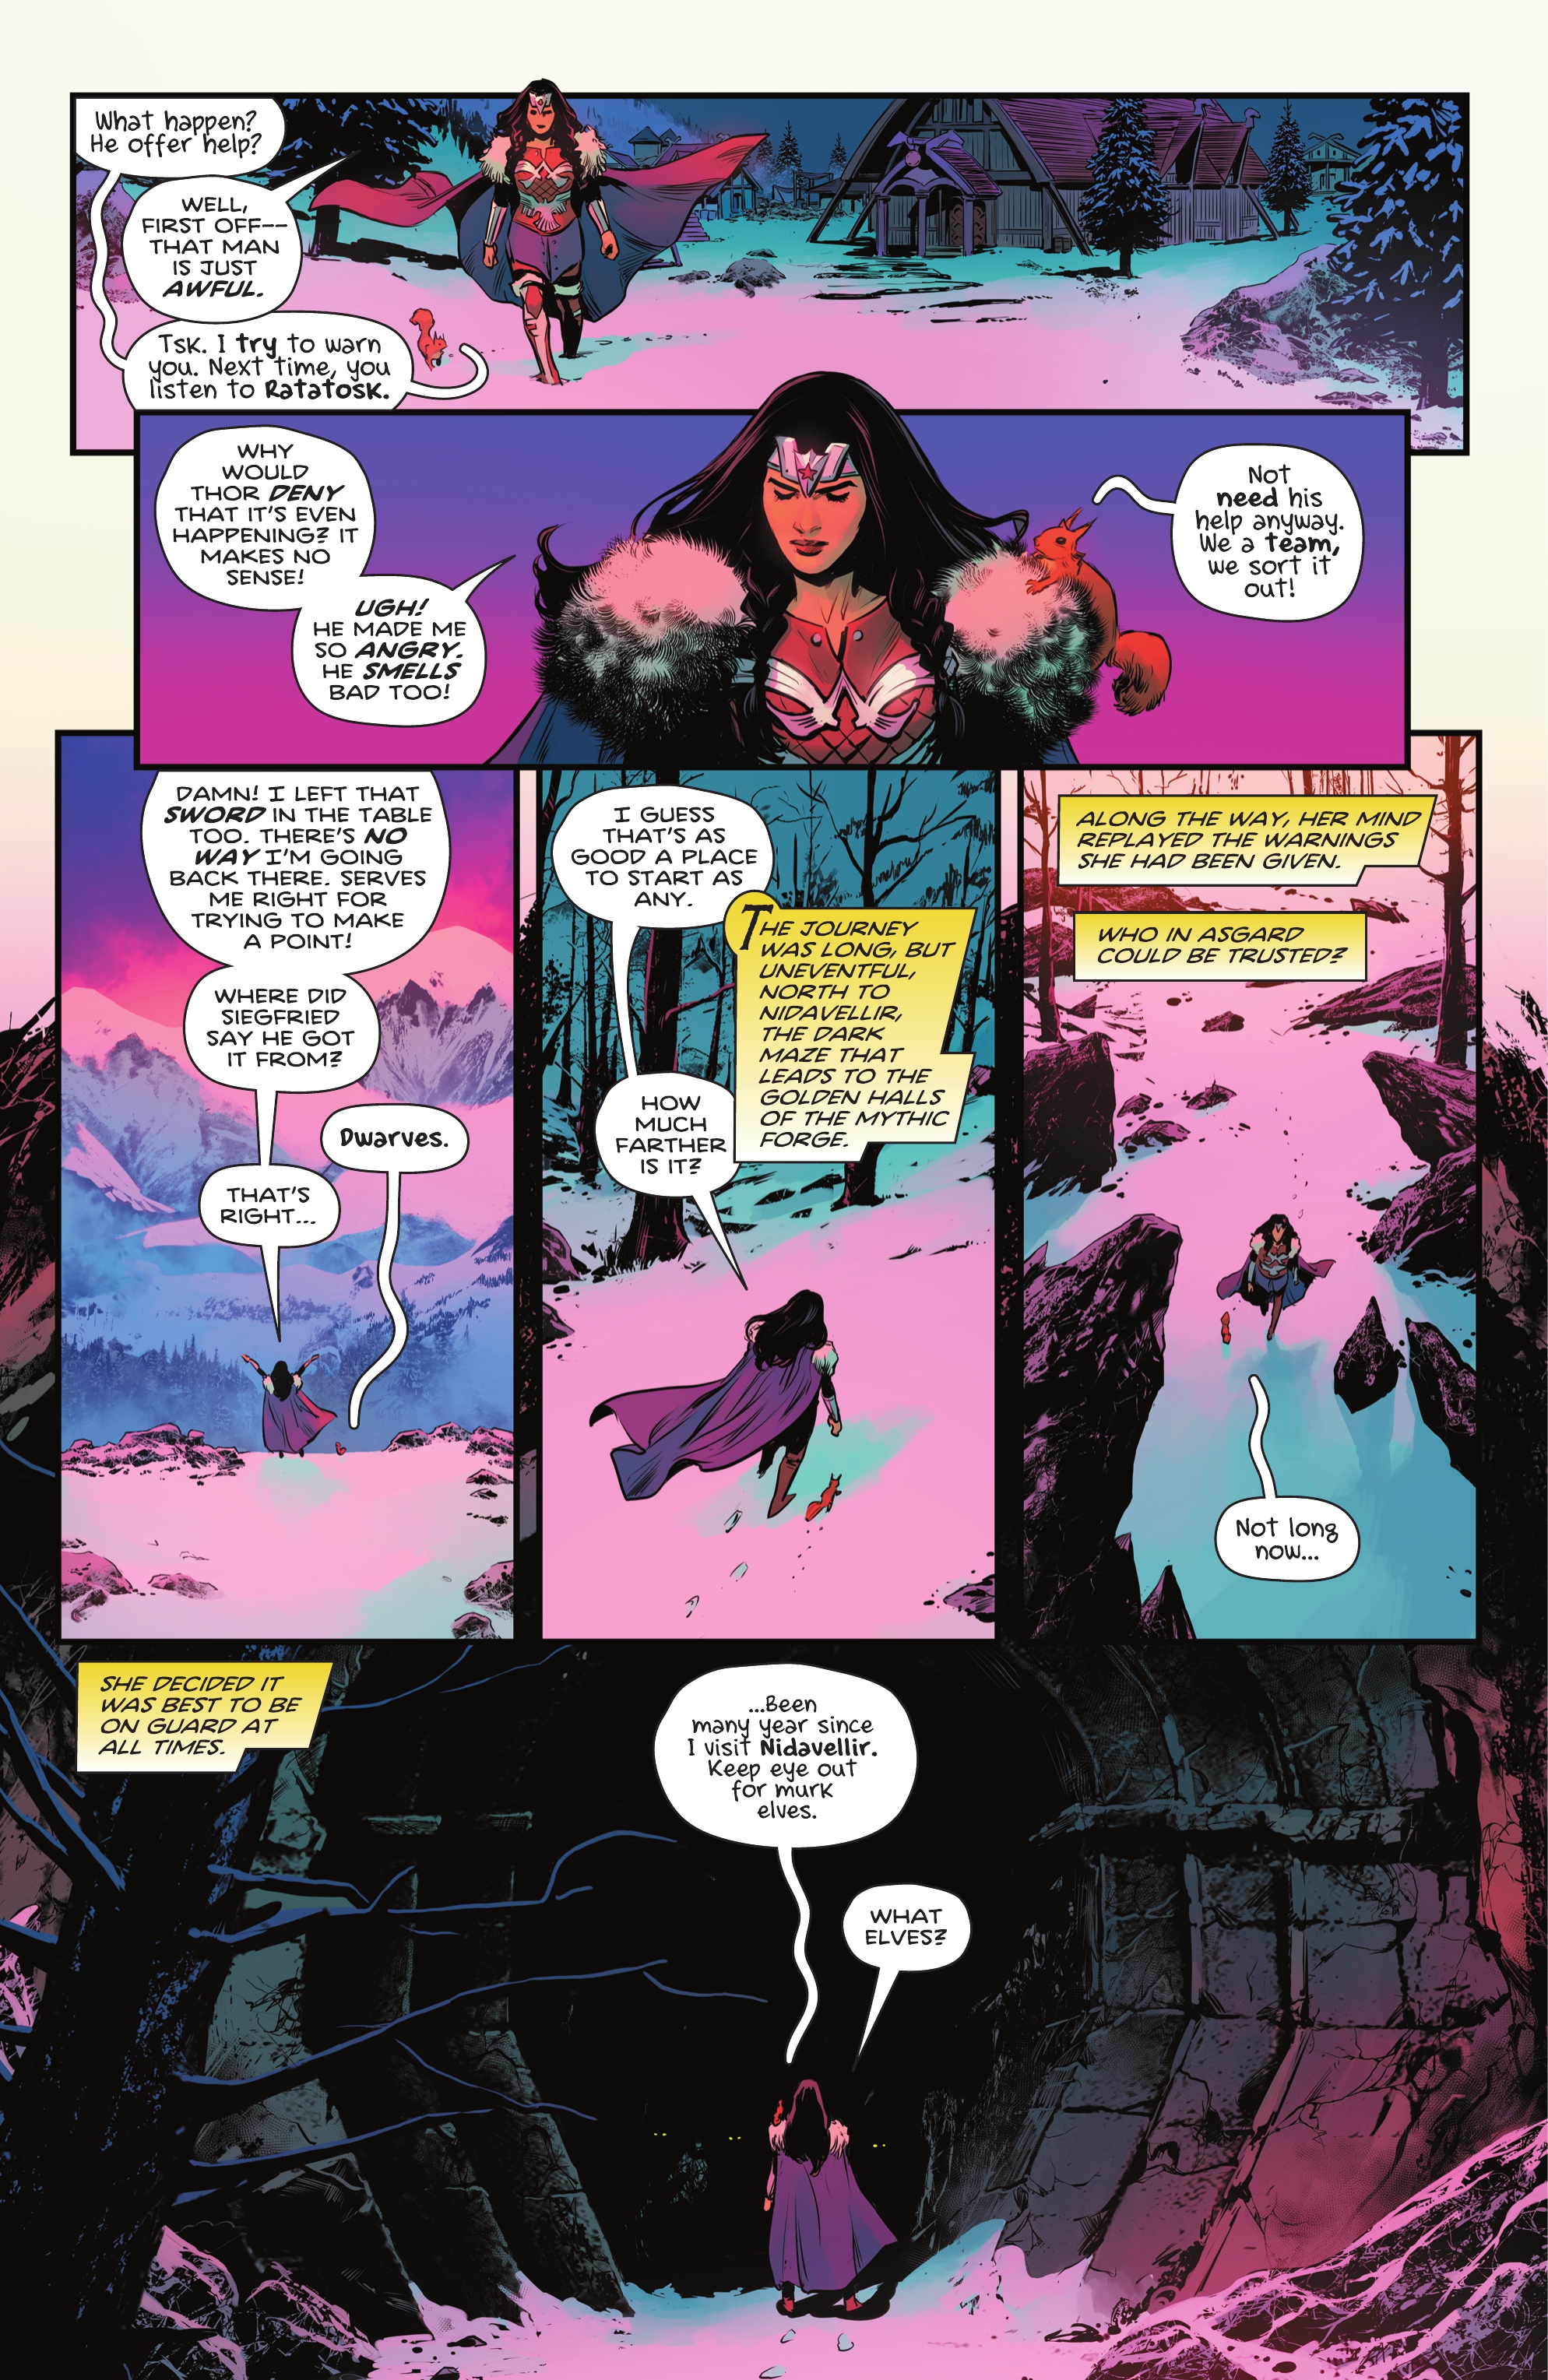 Wonder Woman (2016-): Chapter 771 - Page 4